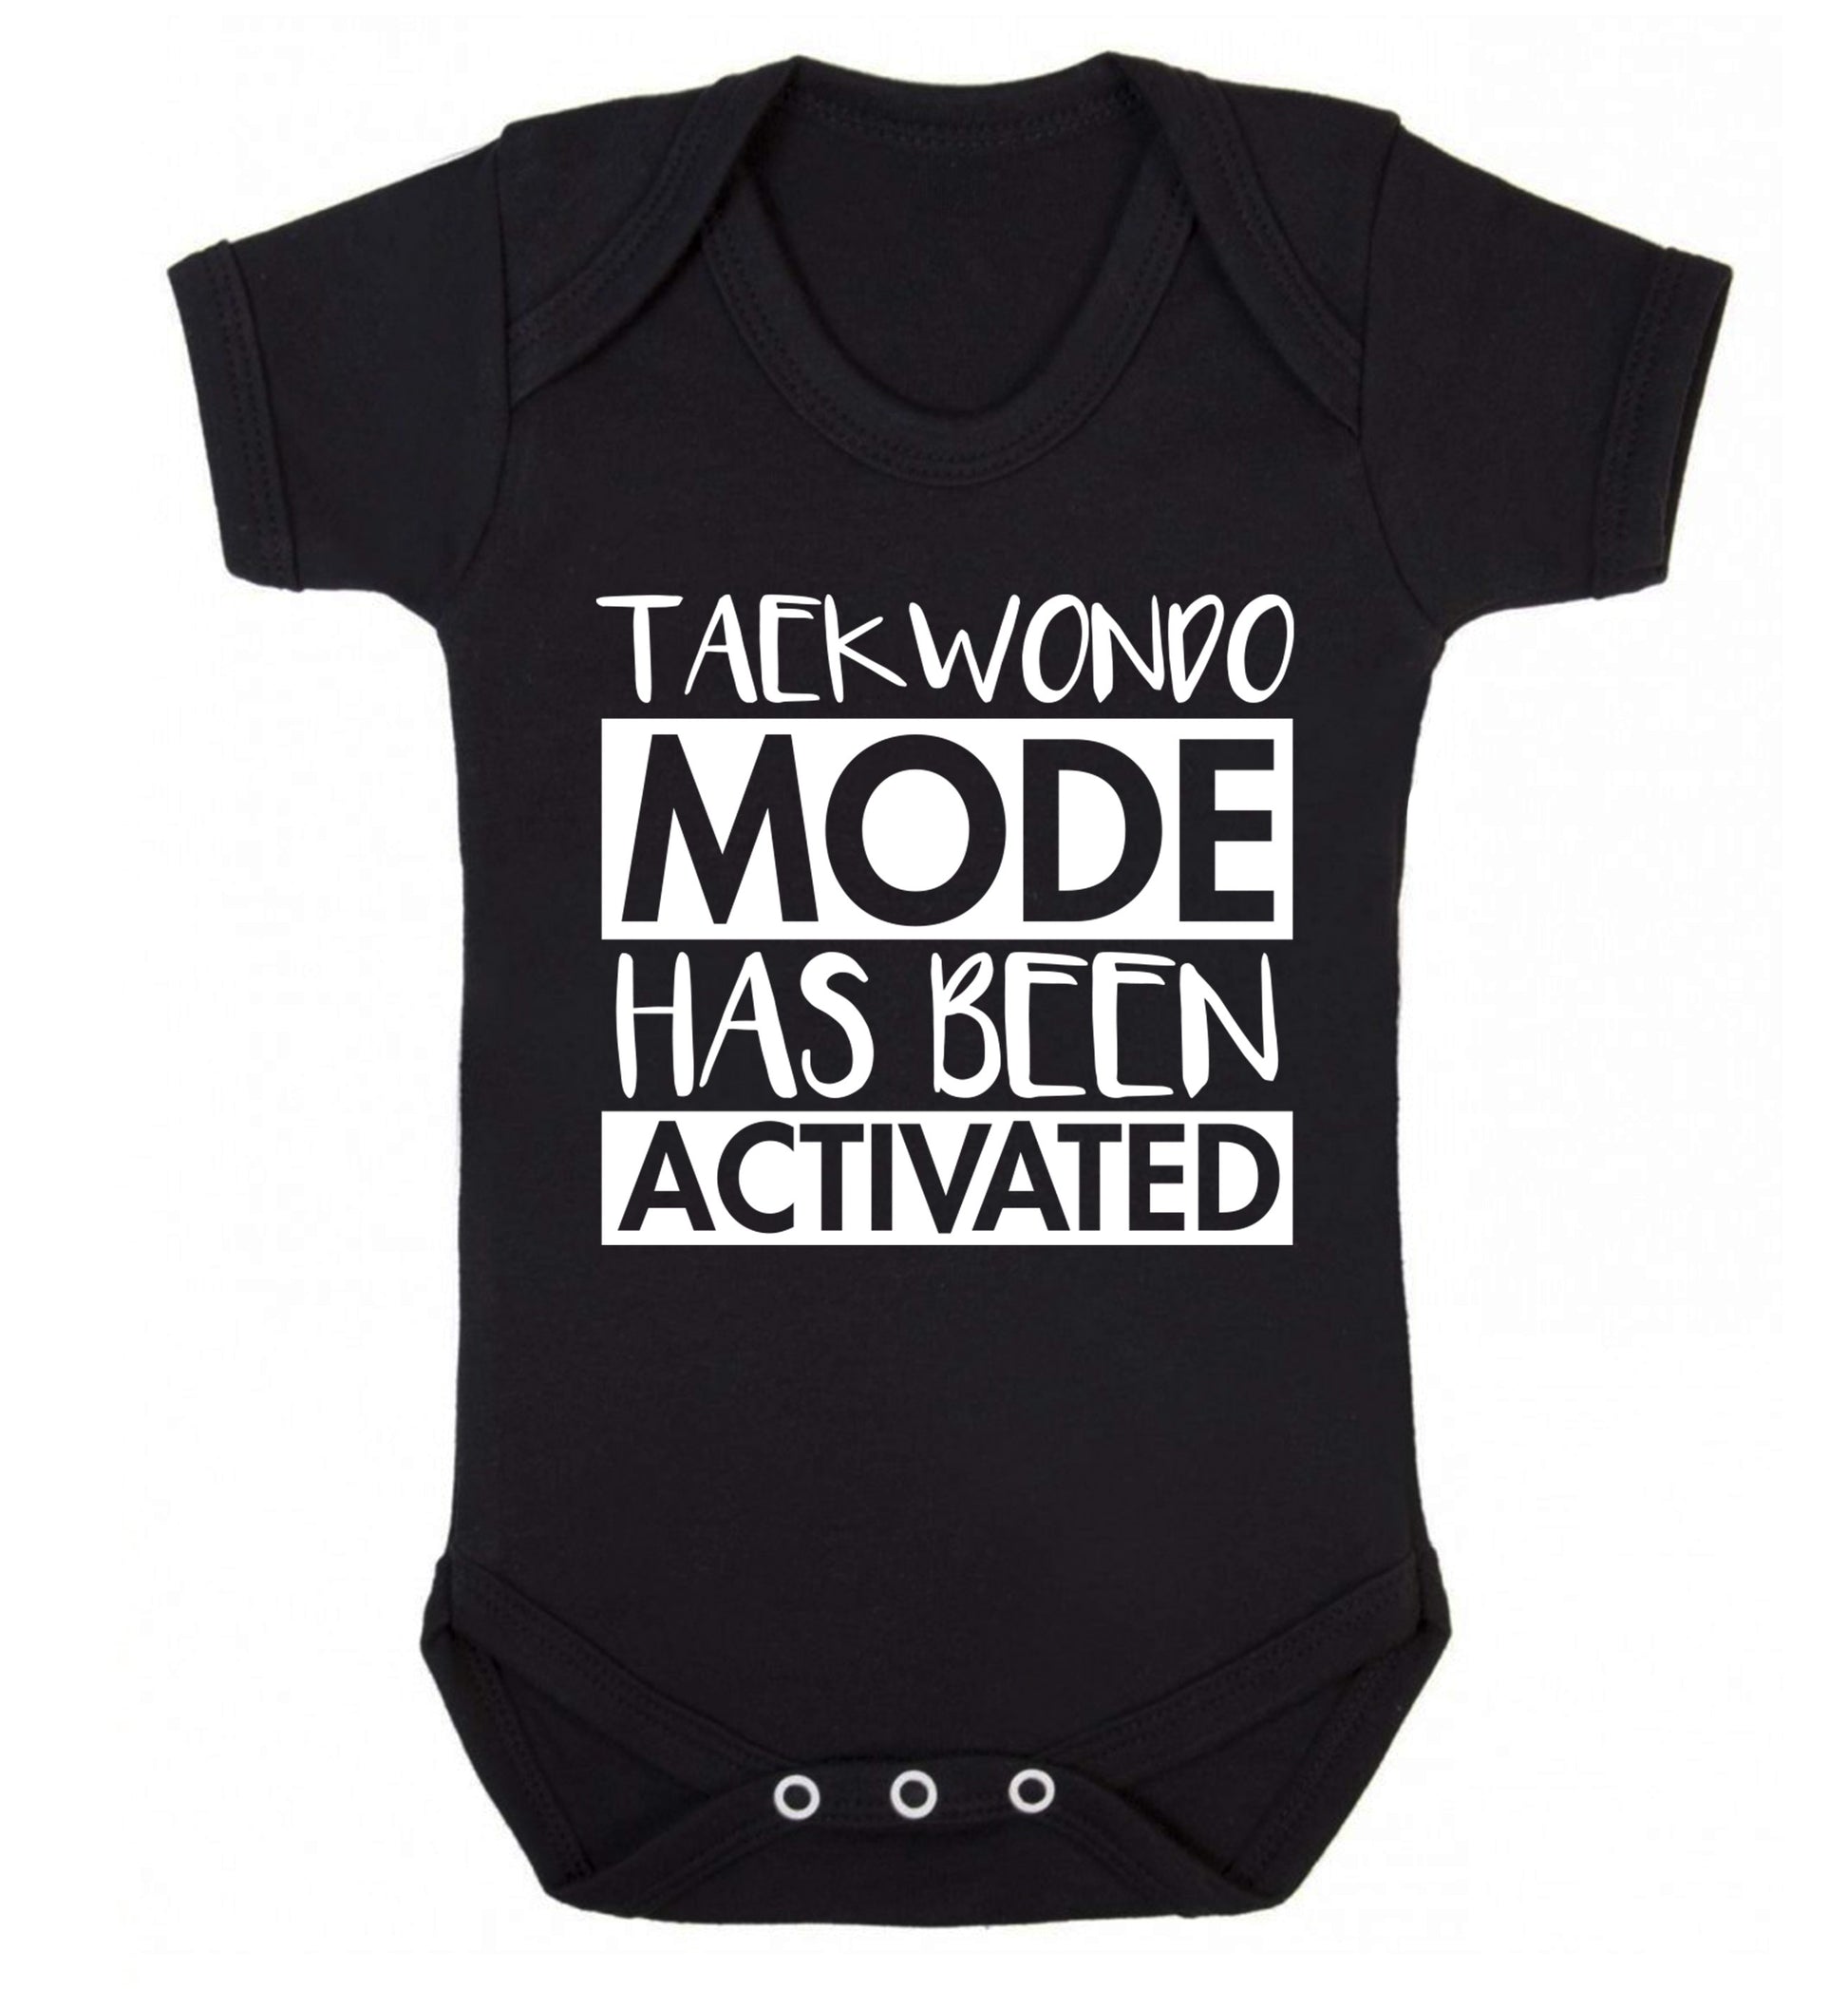 Taekwondo mode activated Baby Vest black 18-24 months